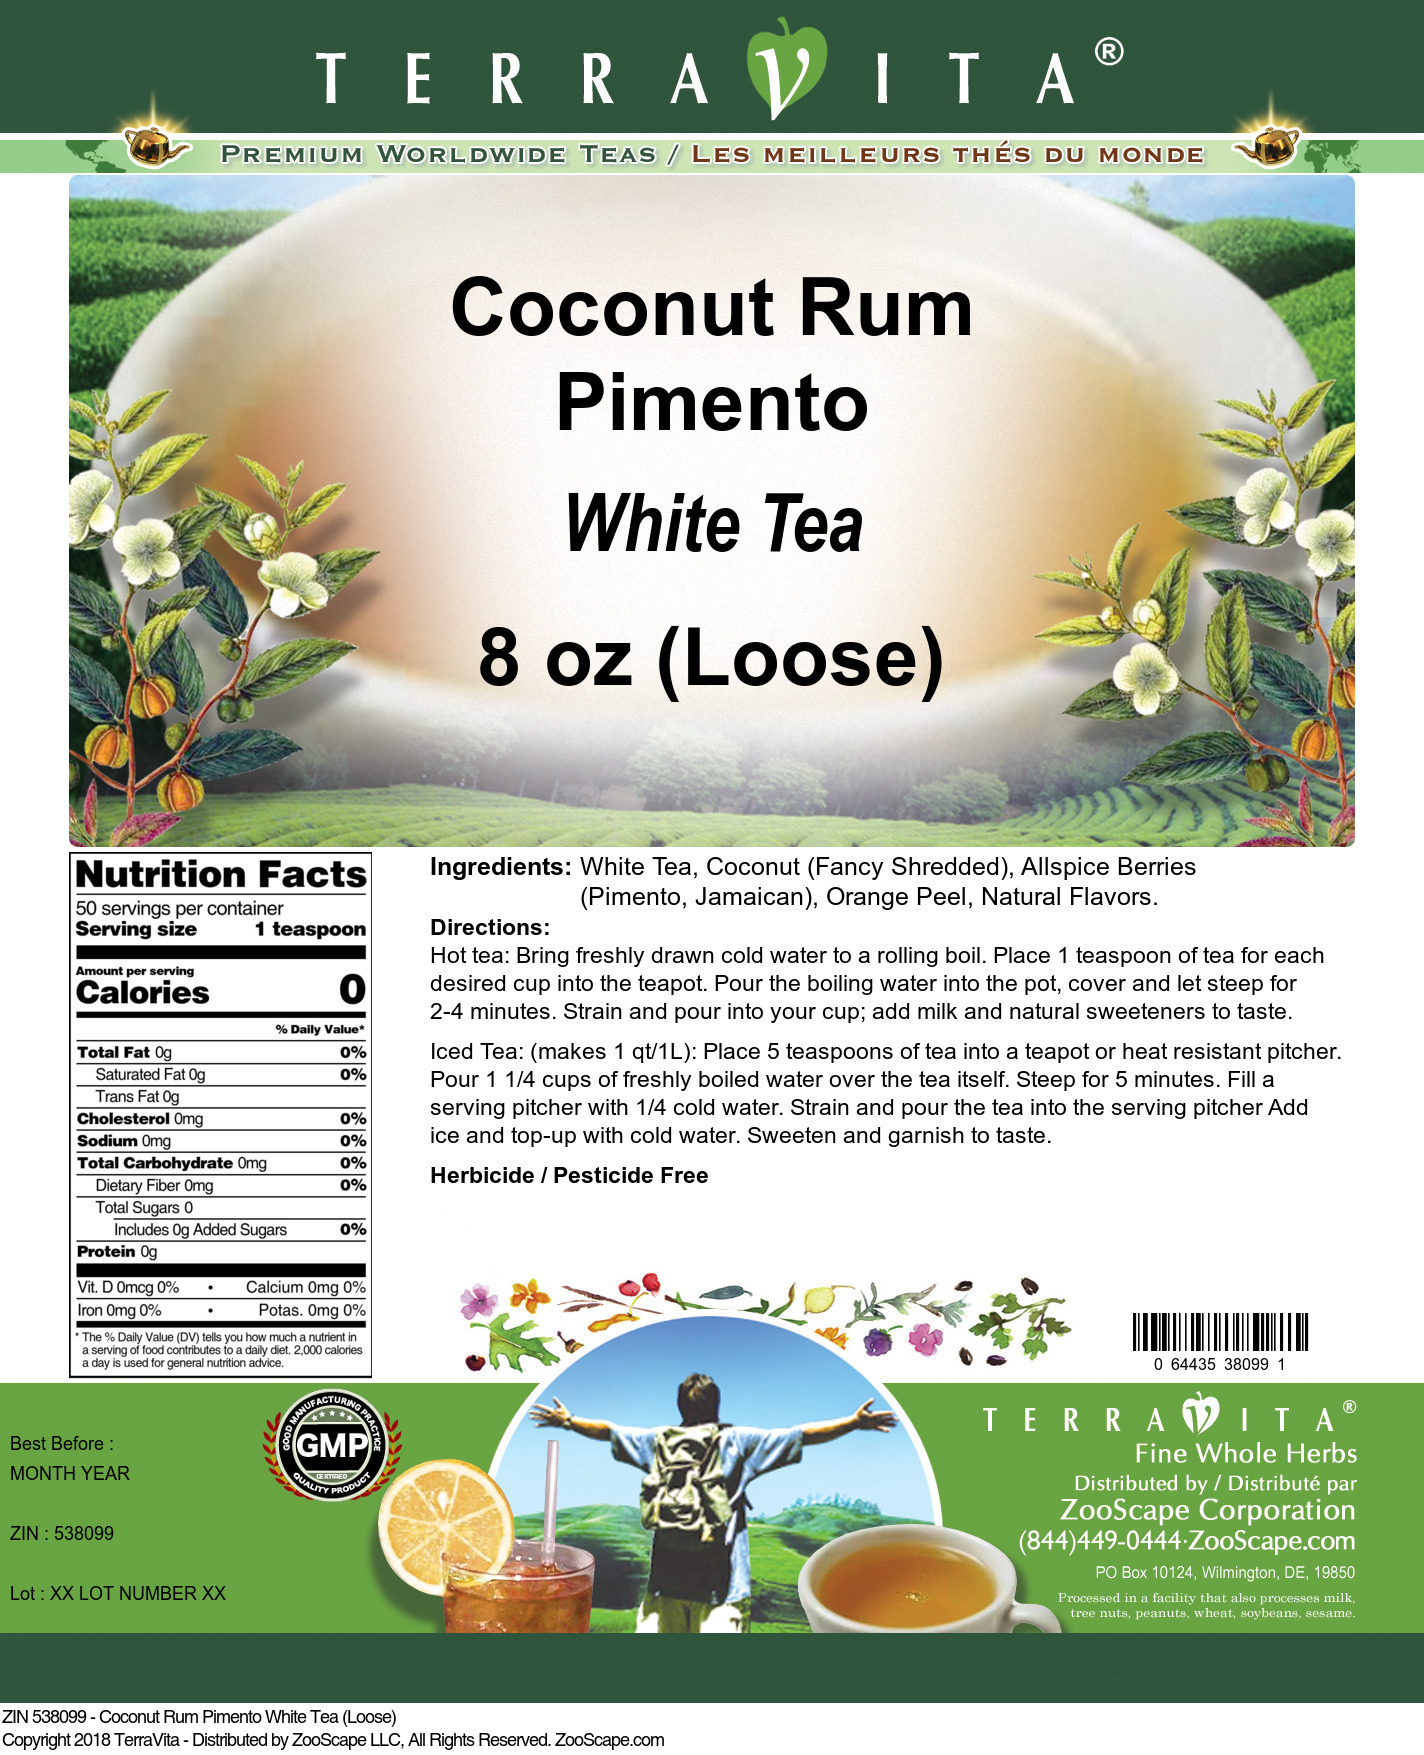 Coconut Rum Pimento White Tea (Loose) - Label